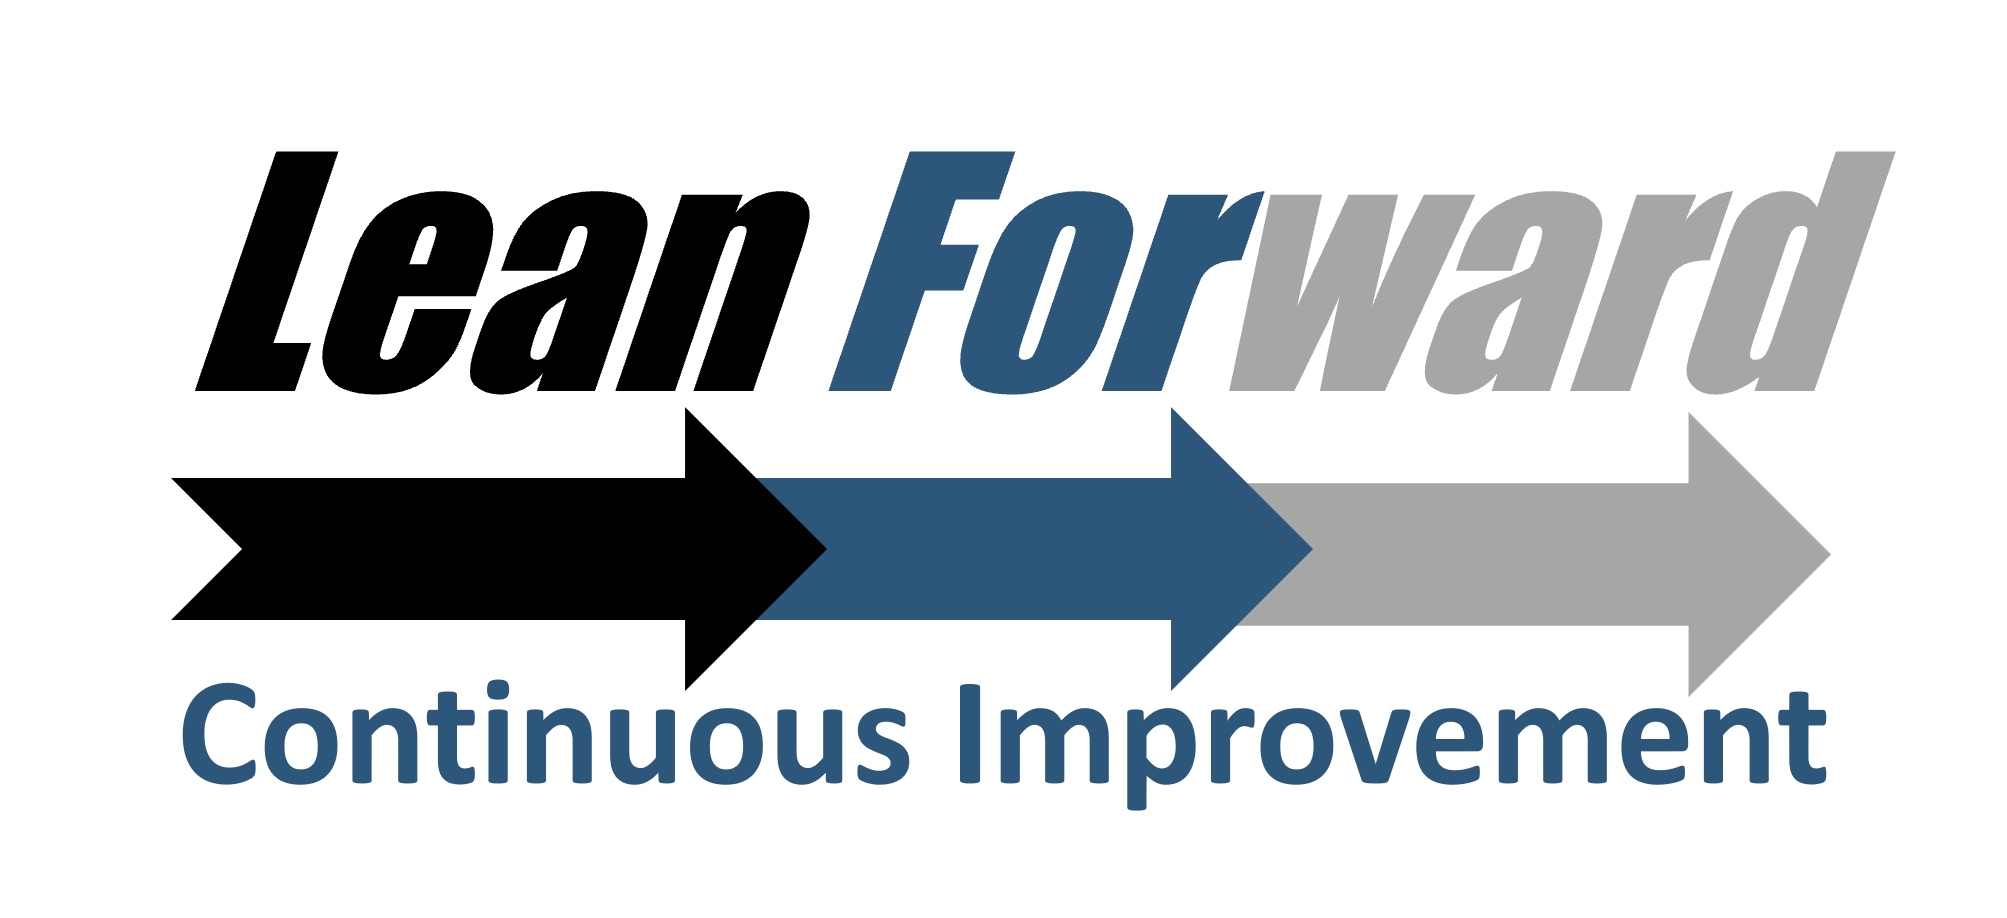 Lean Forward - Continuous Improvement LLC